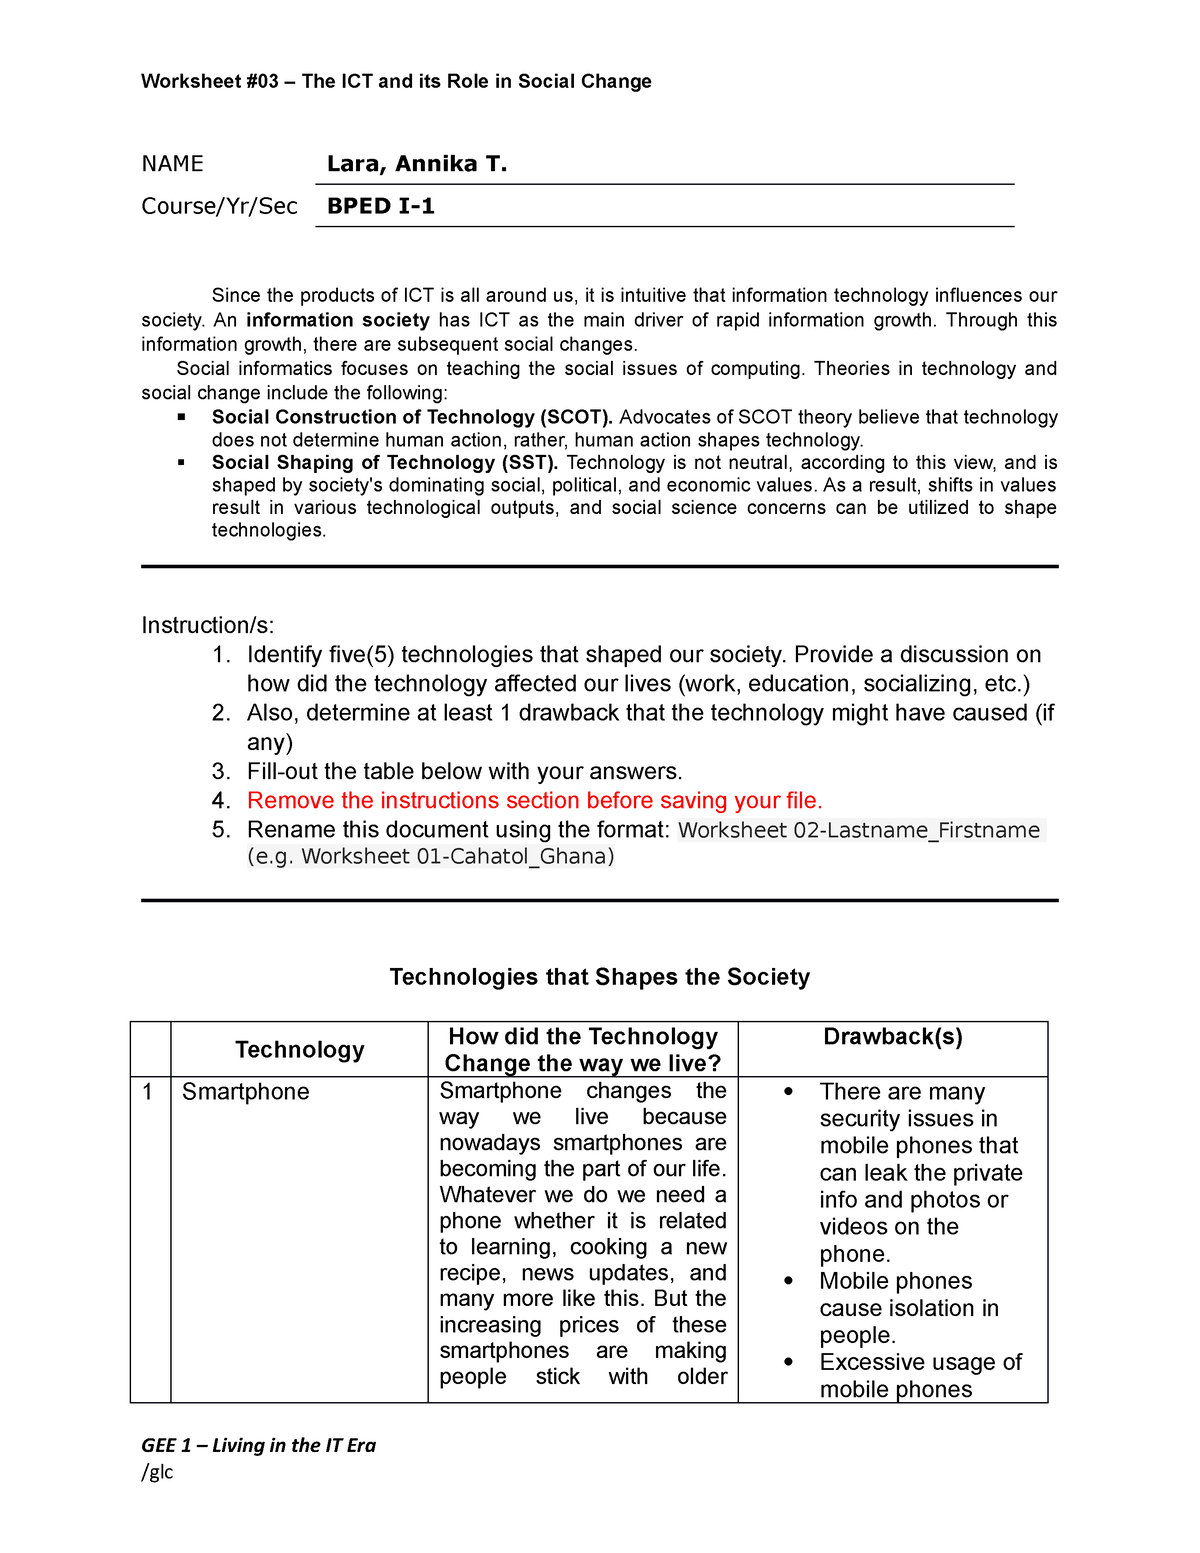 Worksheet 03 - Lara, Annika T - Worksheet #03 – The ICT and its Role in  Social Change NAME Lara, - Studocu